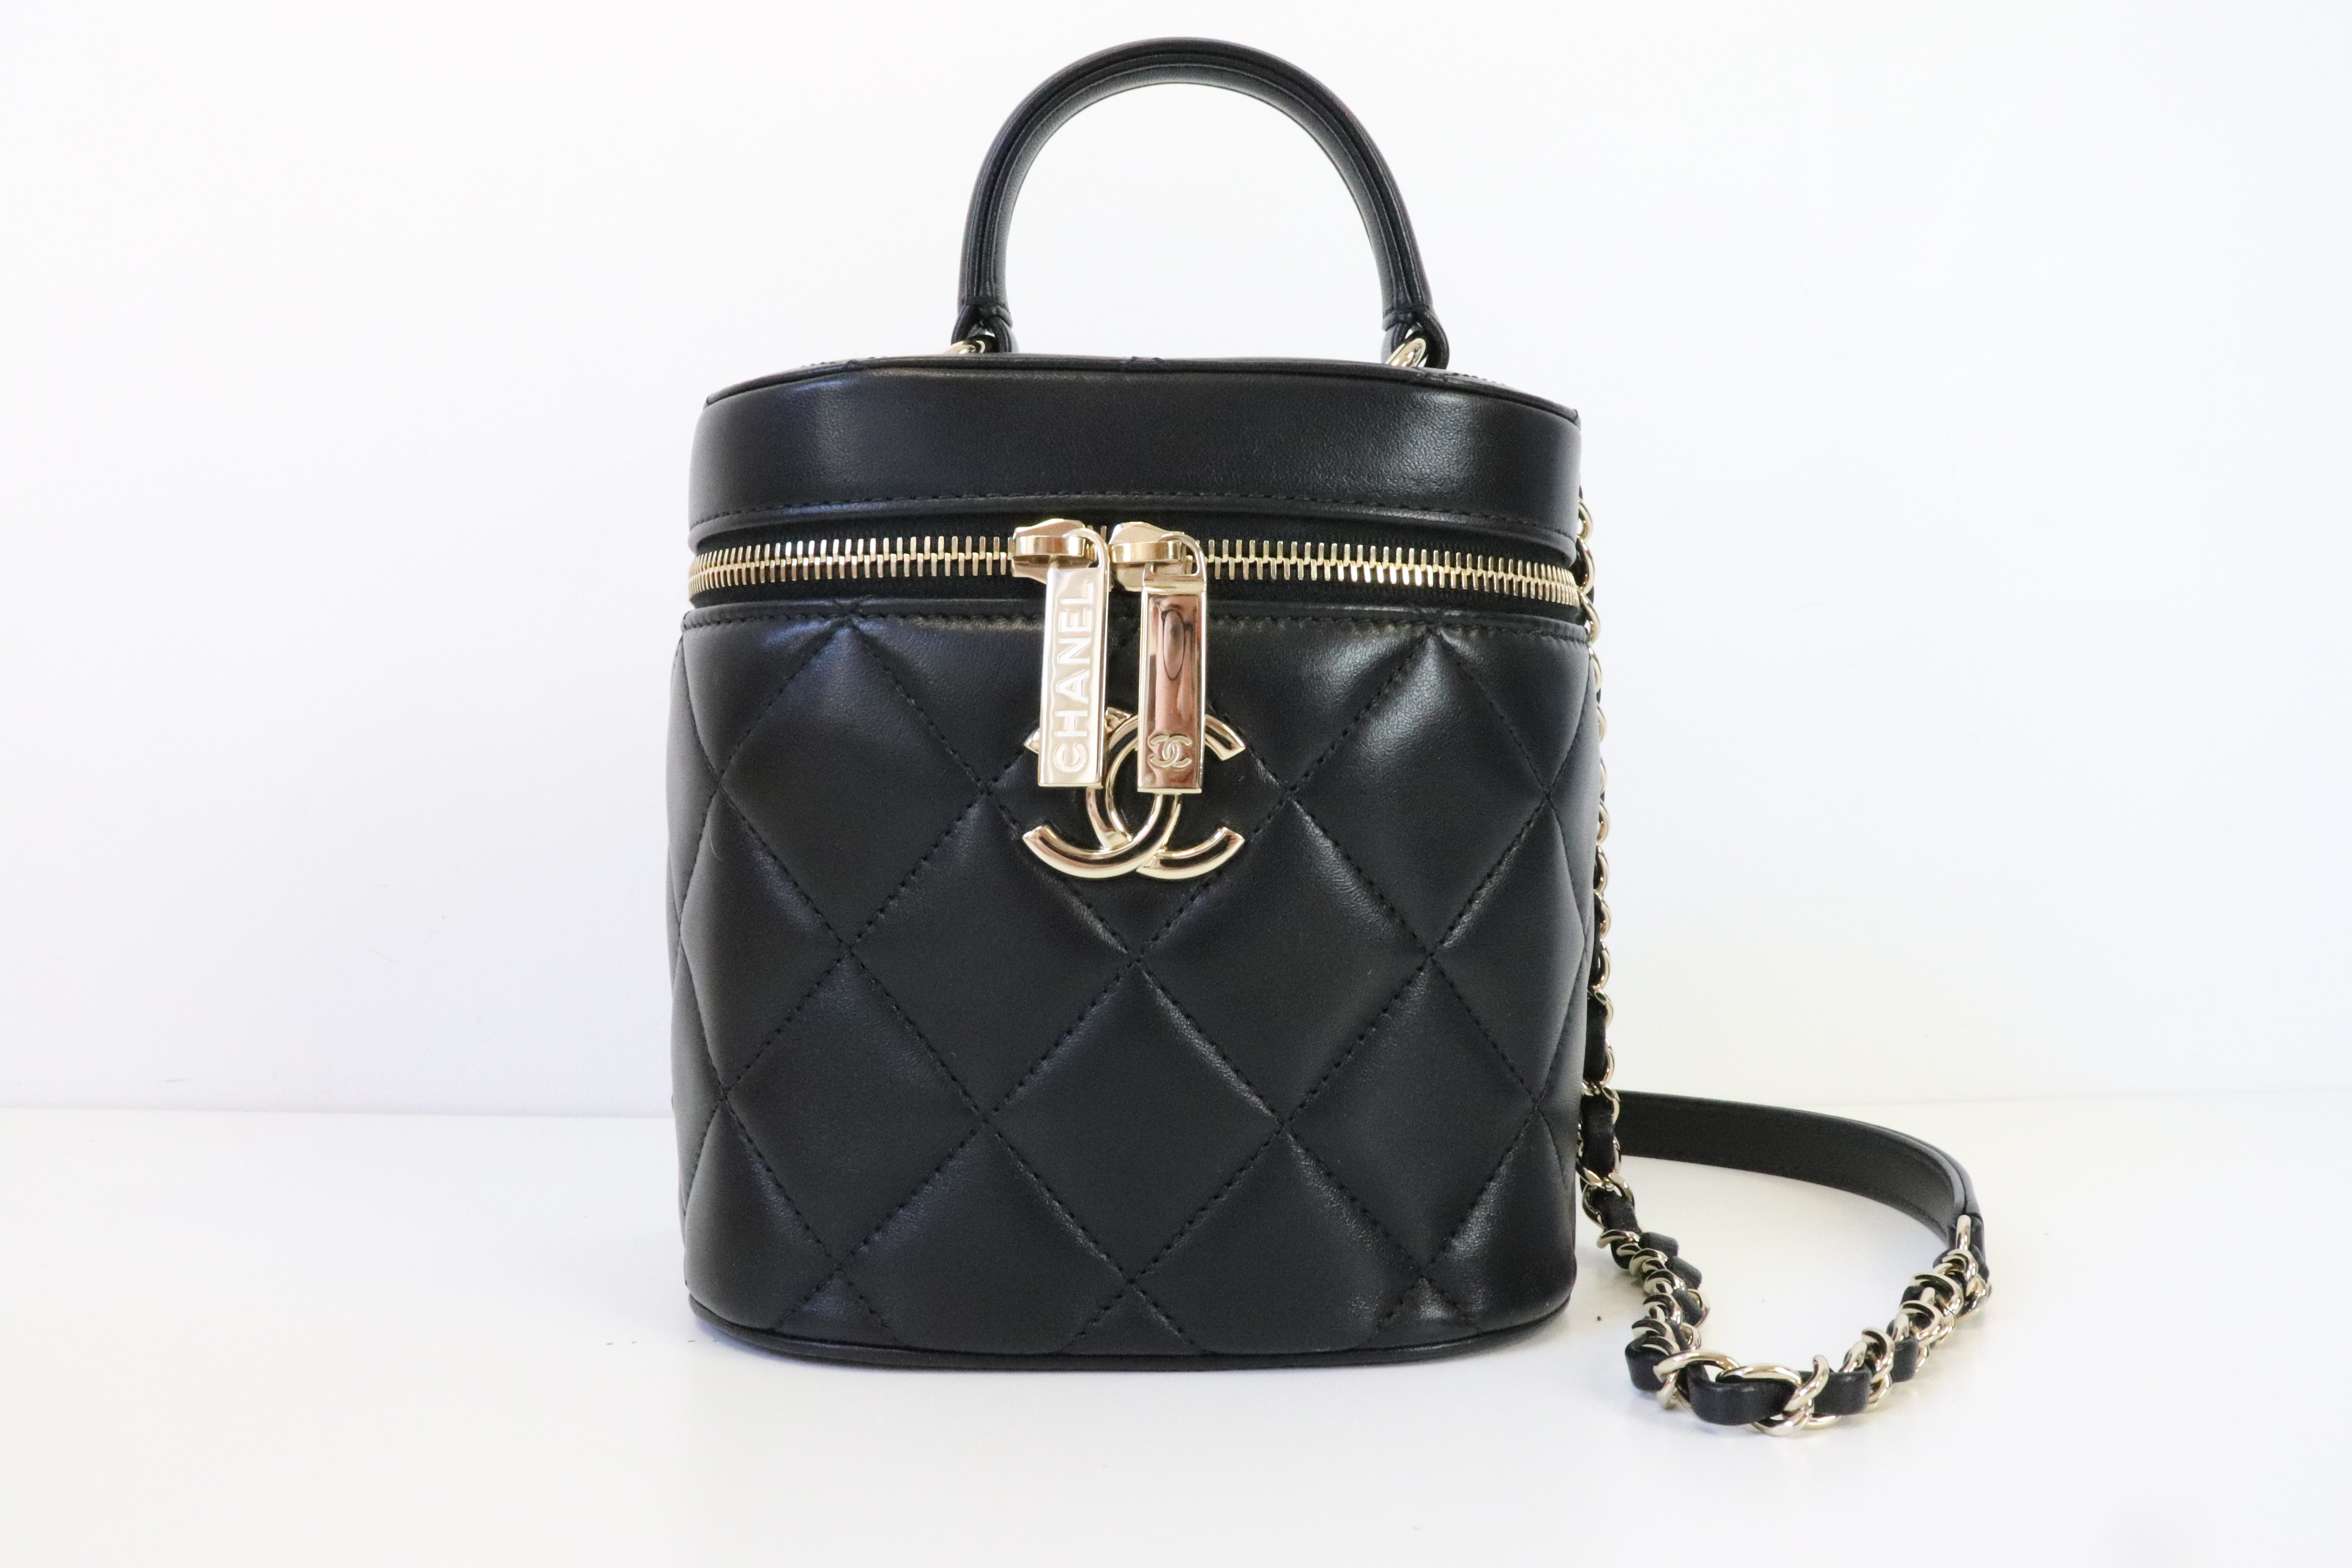 Chanel Vanity Trendy Black, Like New, in Dustbag